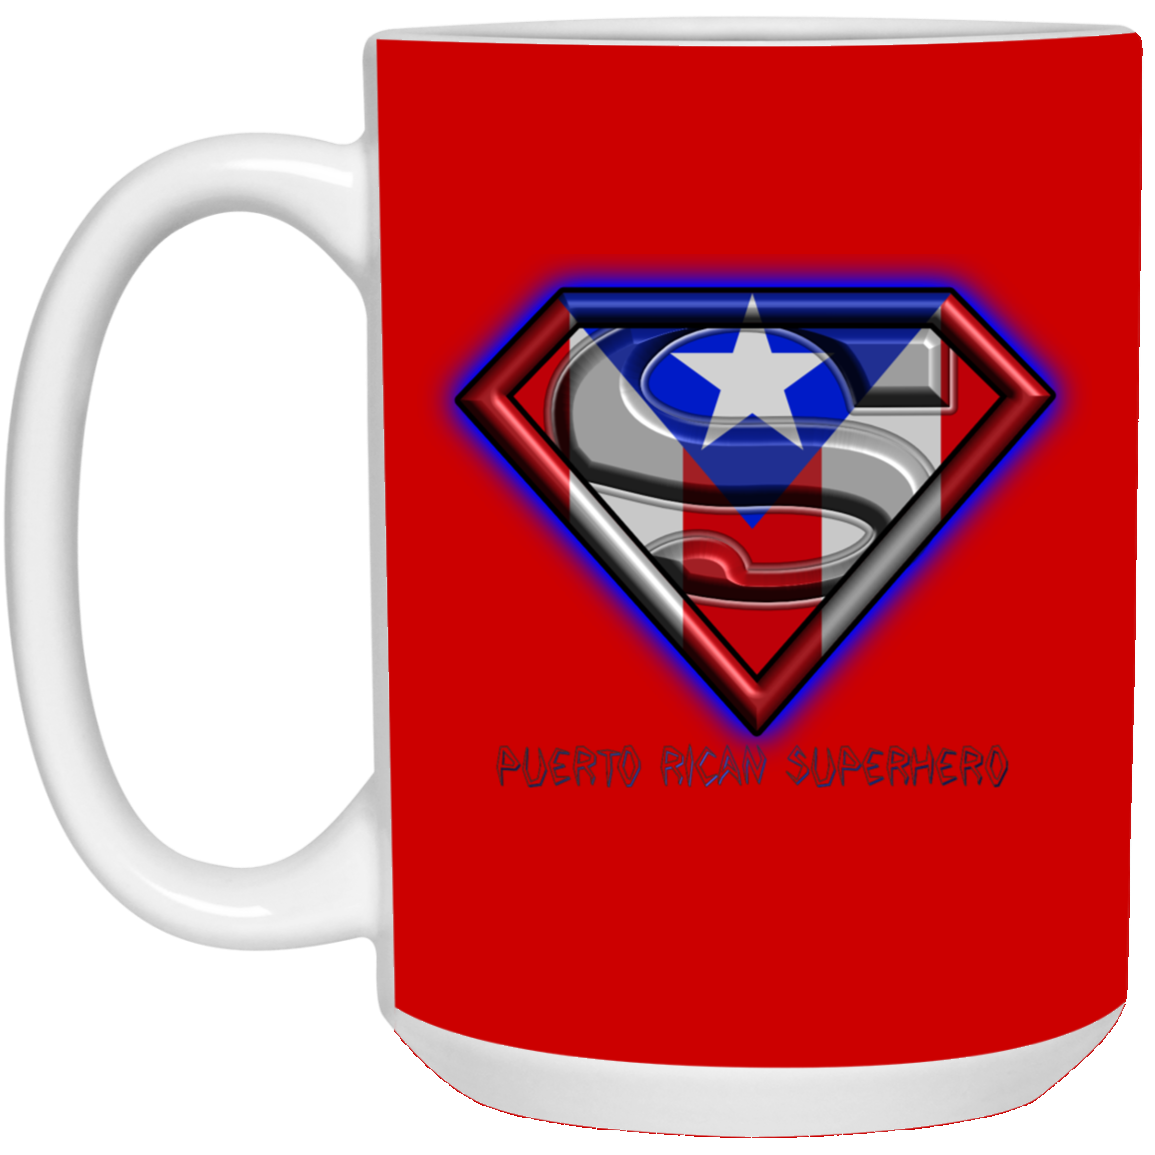 Puerto Rican Superhero 15 oz. White Mug - Puerto Rican Pride